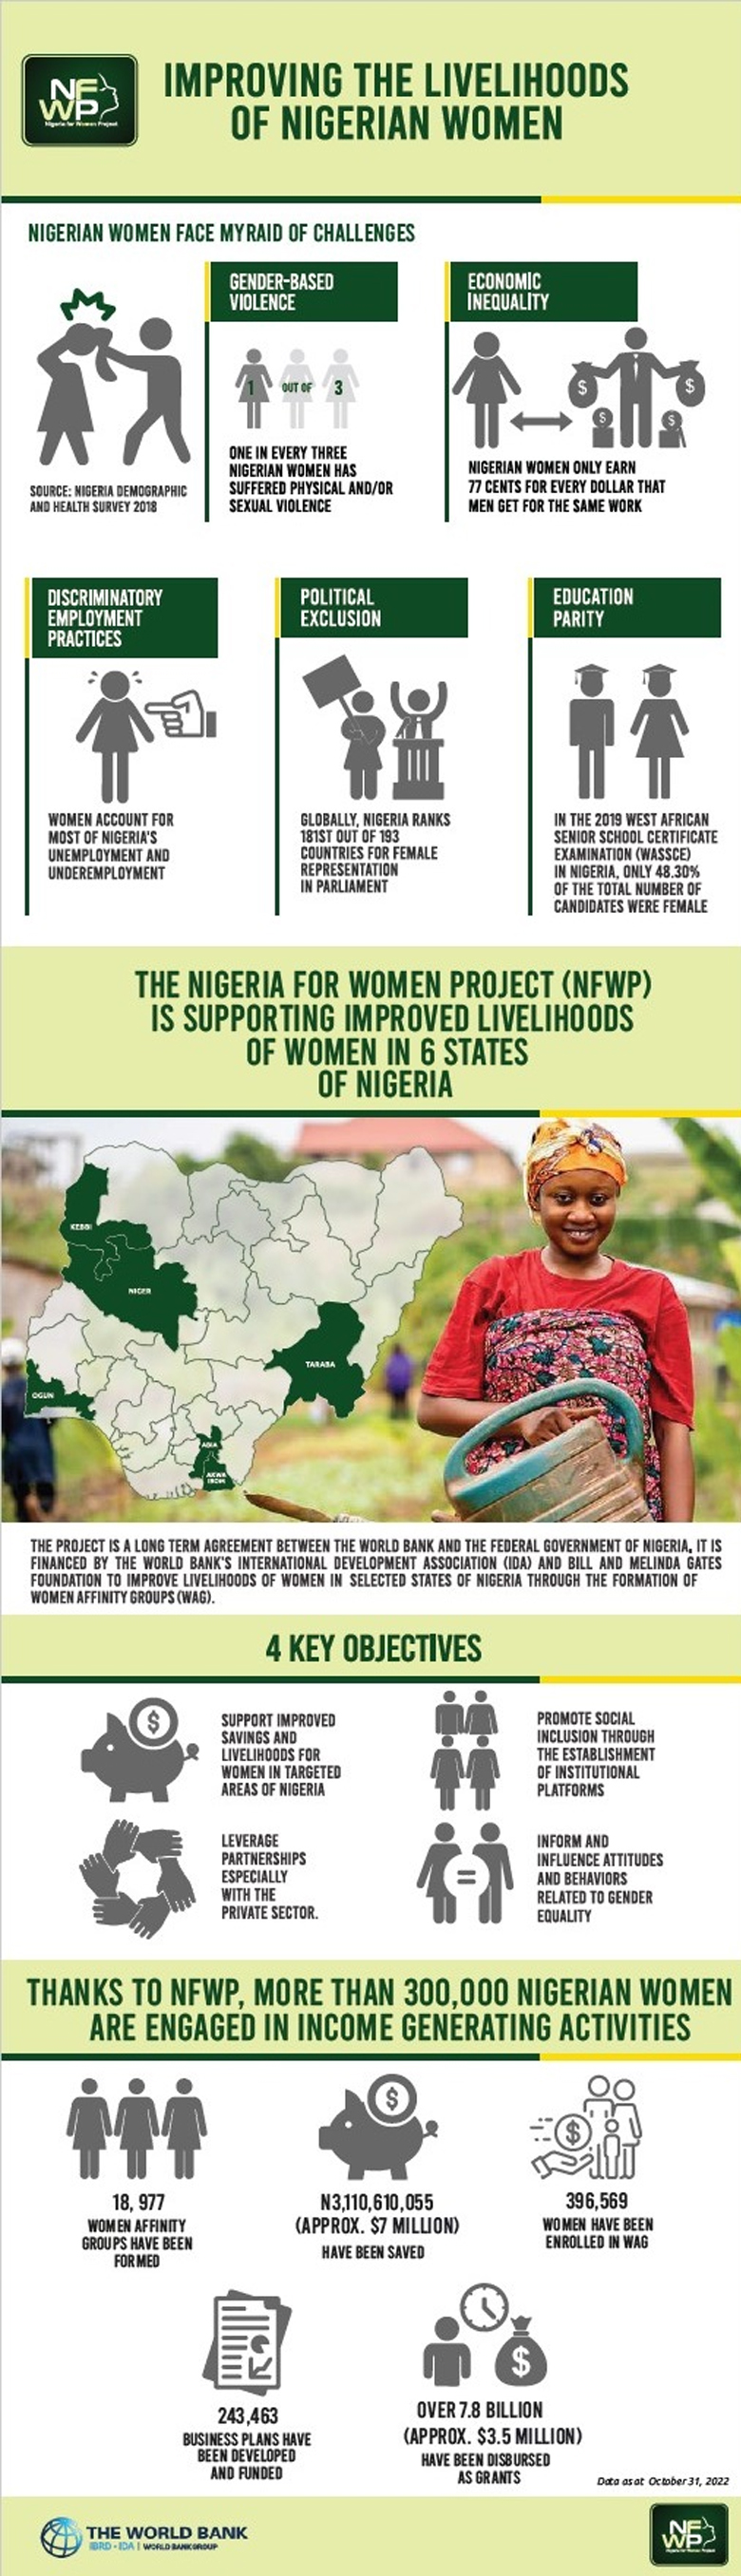 Improving the livelihoods of Nigerian Women